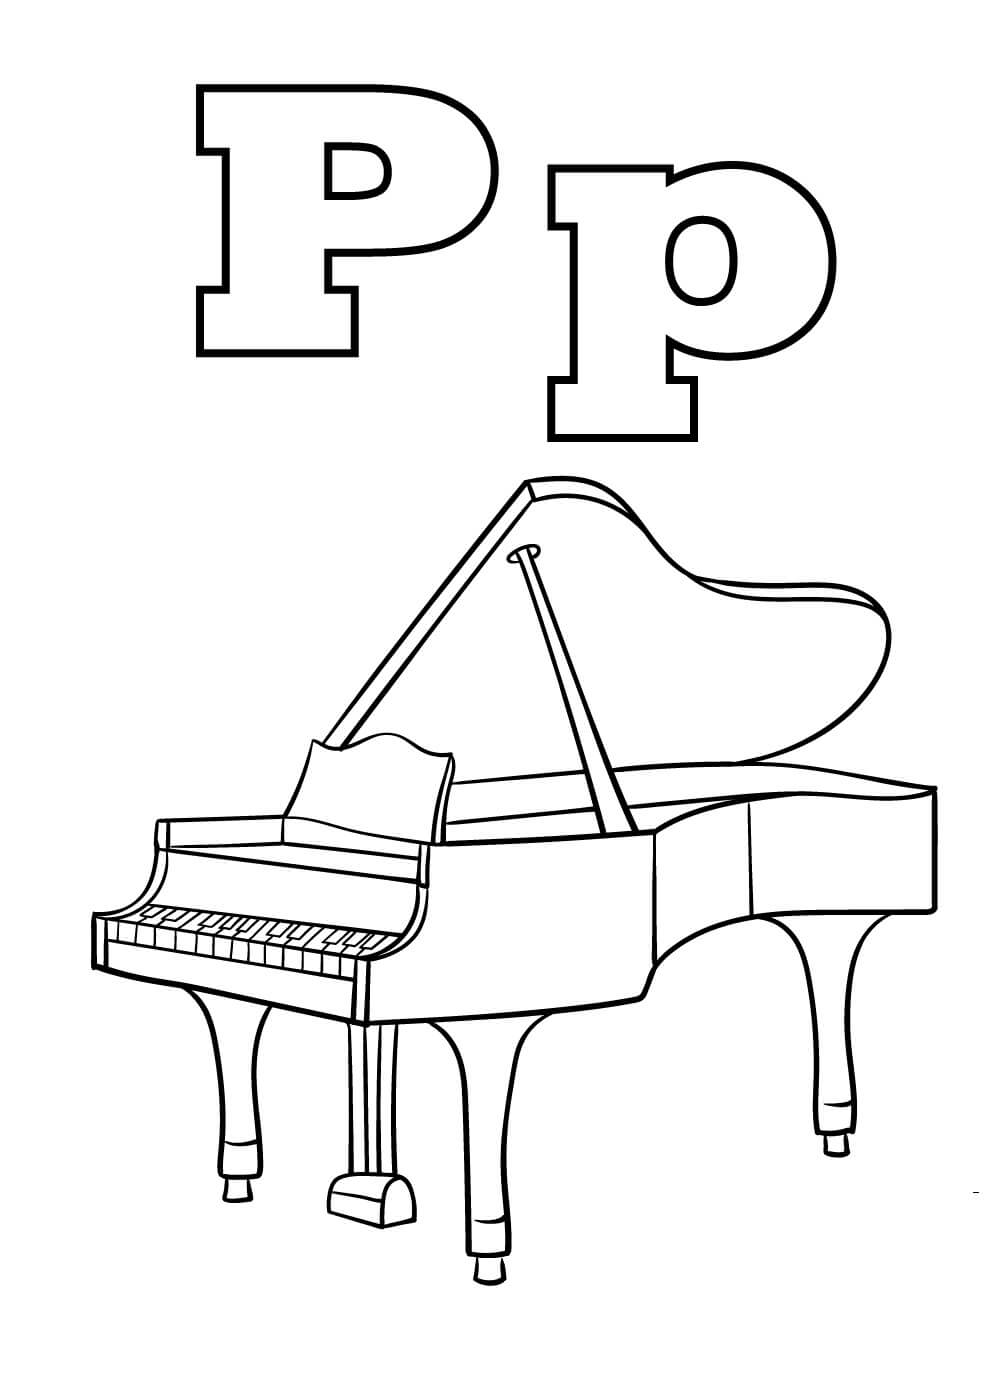 Letter P en Piano